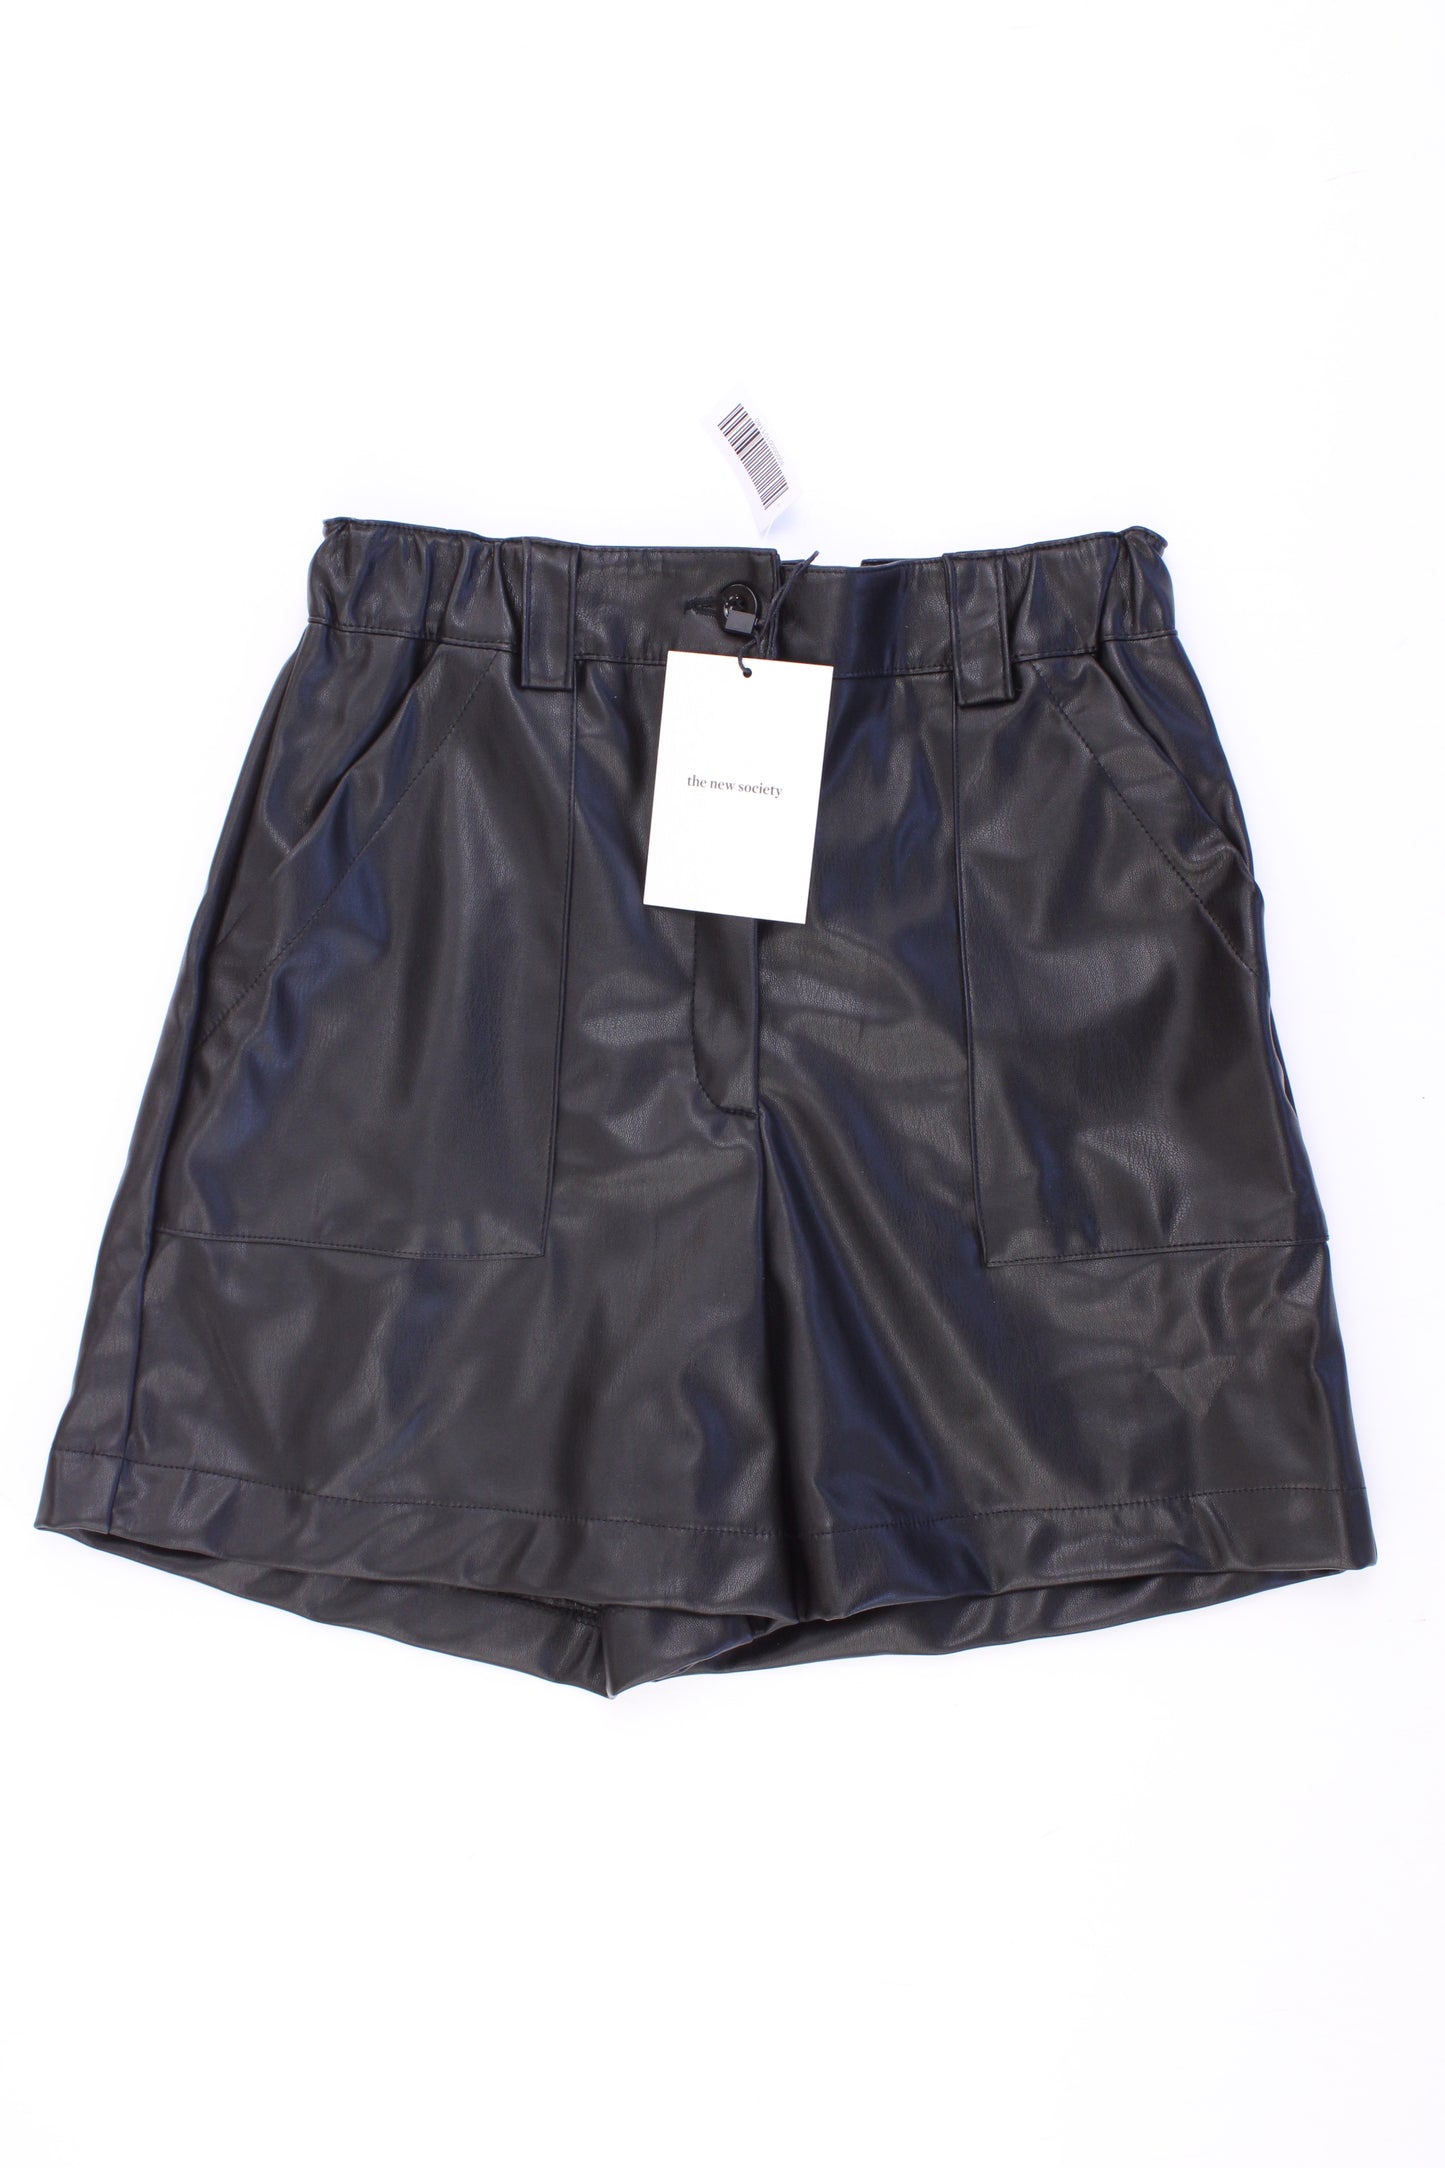 The New Society Kinder Kunstledershorts Recycled Leather Short Pant schwarz Größe 14 Jahre neu mit Etikett